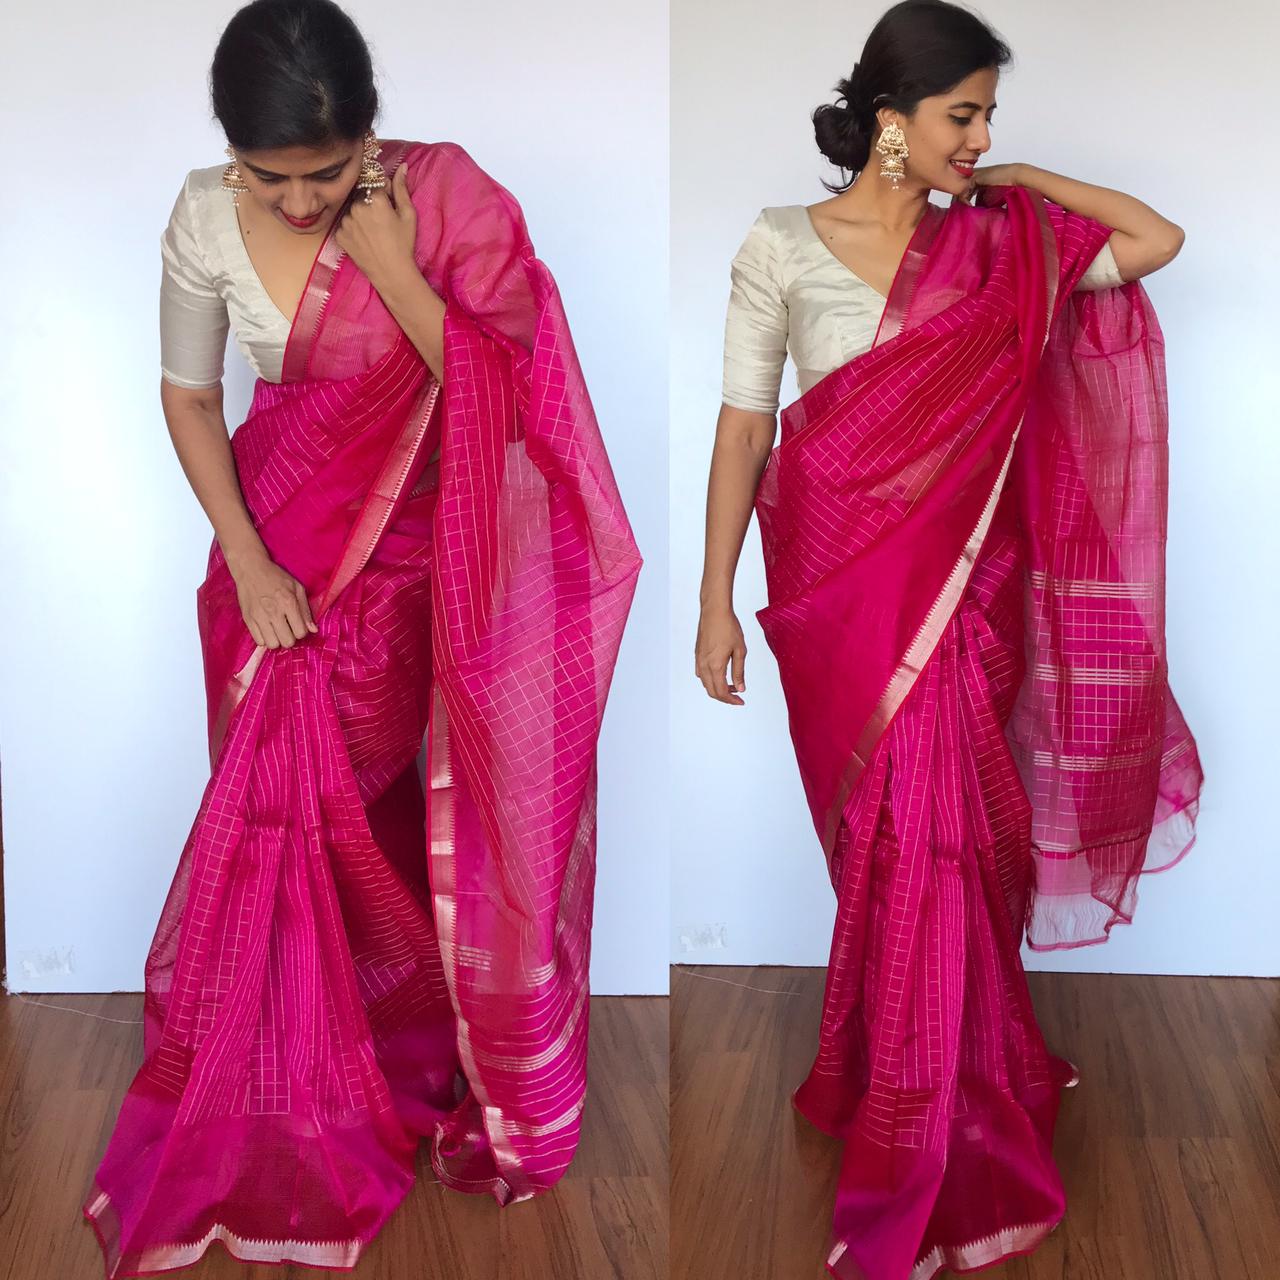 5 Stunning Shades Of Pink Saree